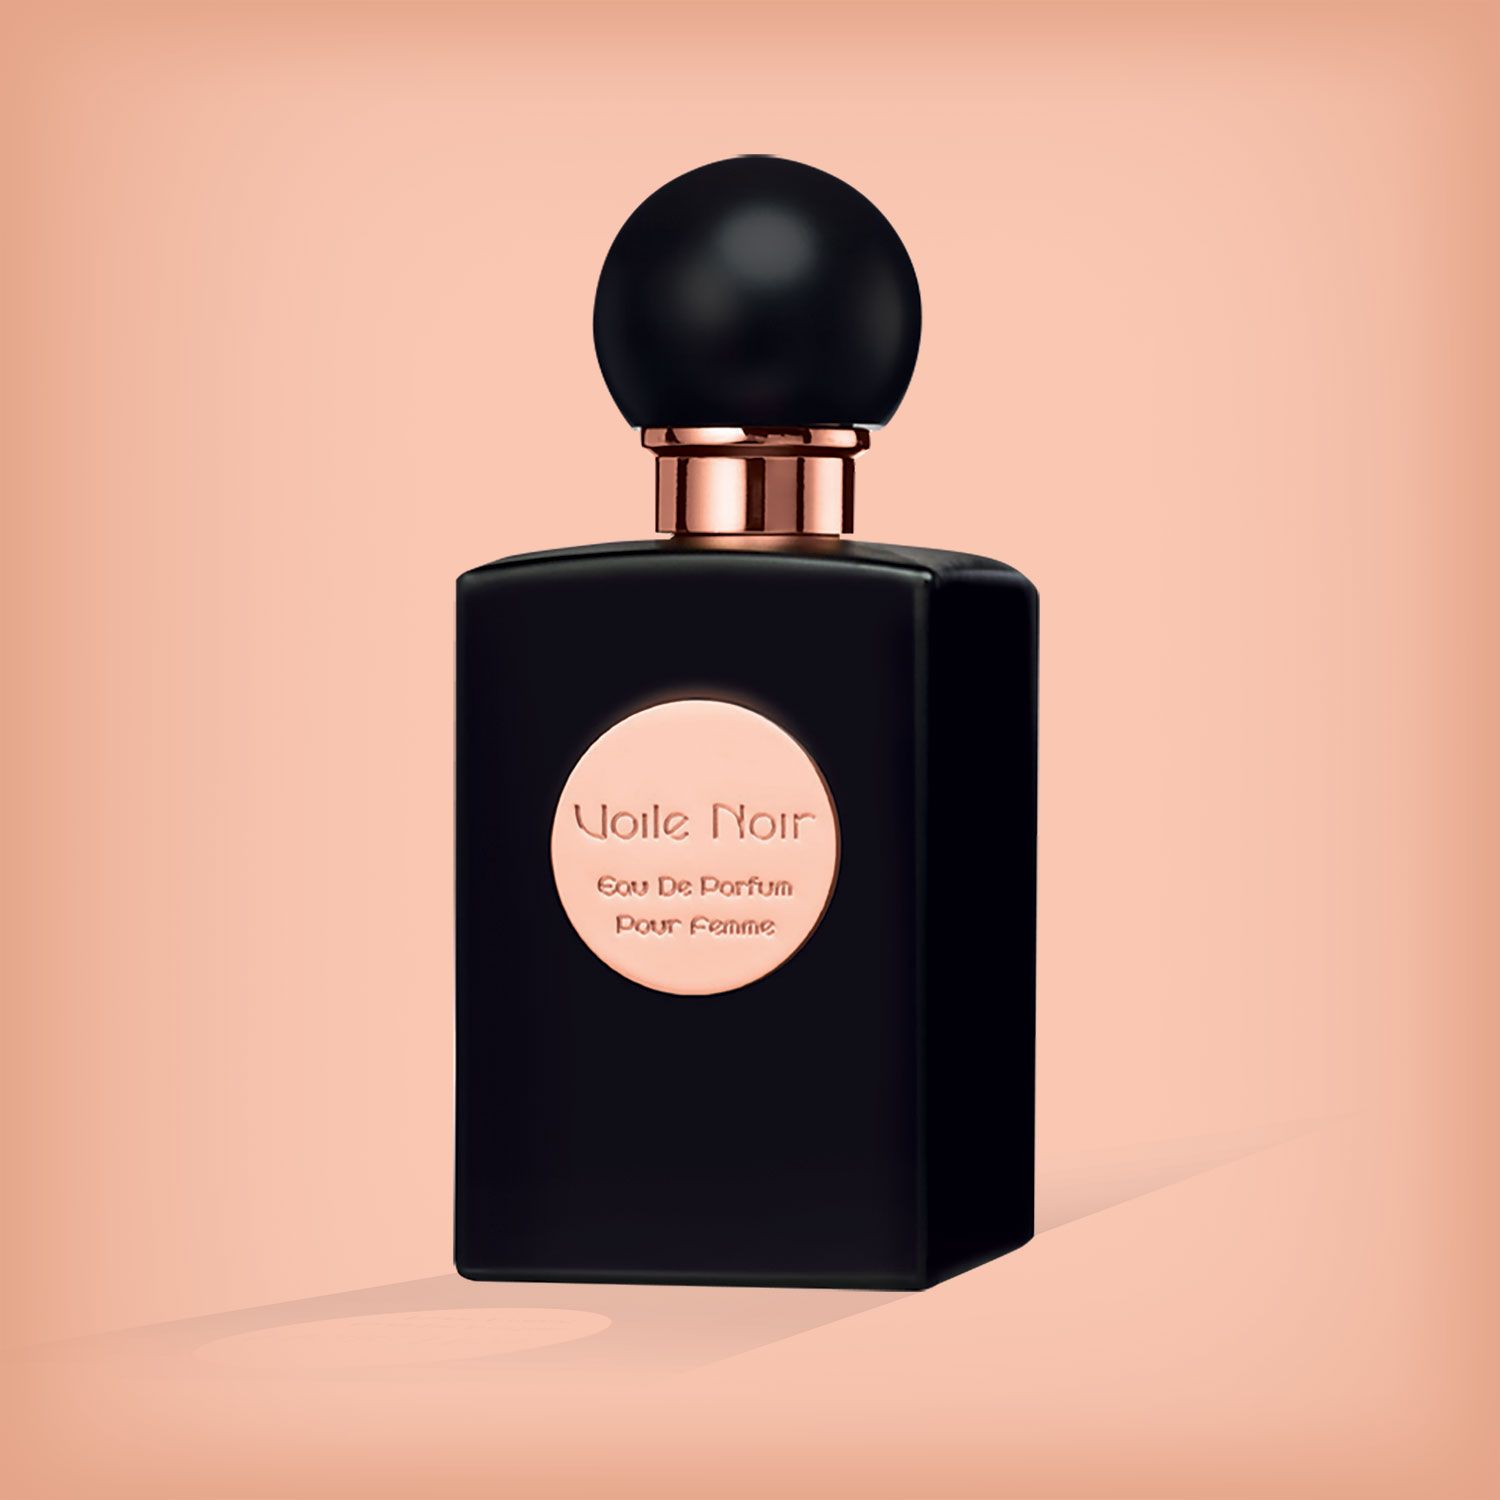 Noir Voile perfume - a fragrance for women 2021